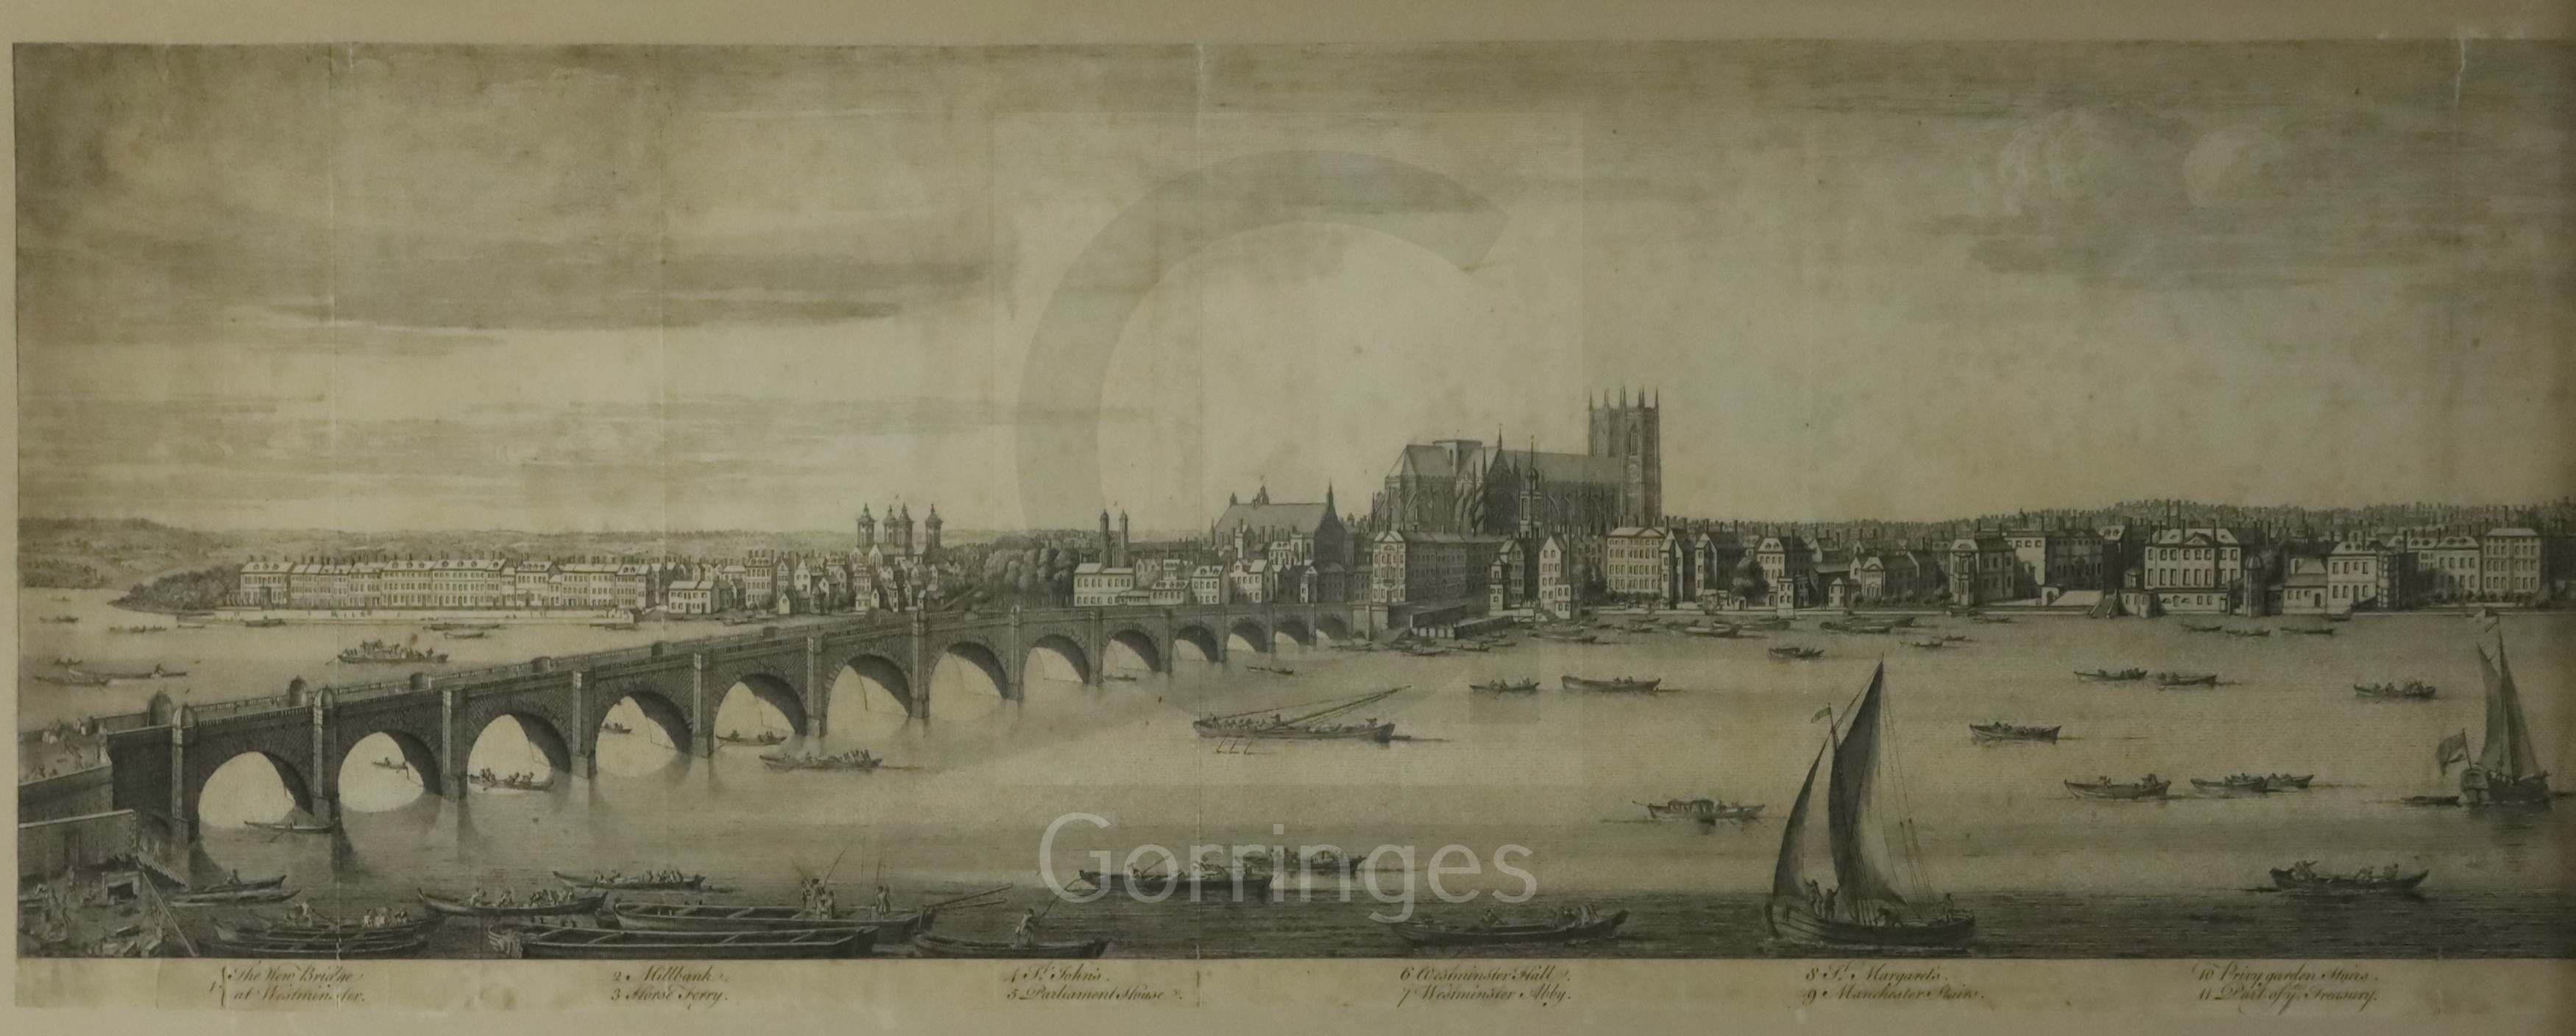 Samuel & Nathaniel BuckengravingA Panorama of Thames from Westminster Bridge to London Bridge,